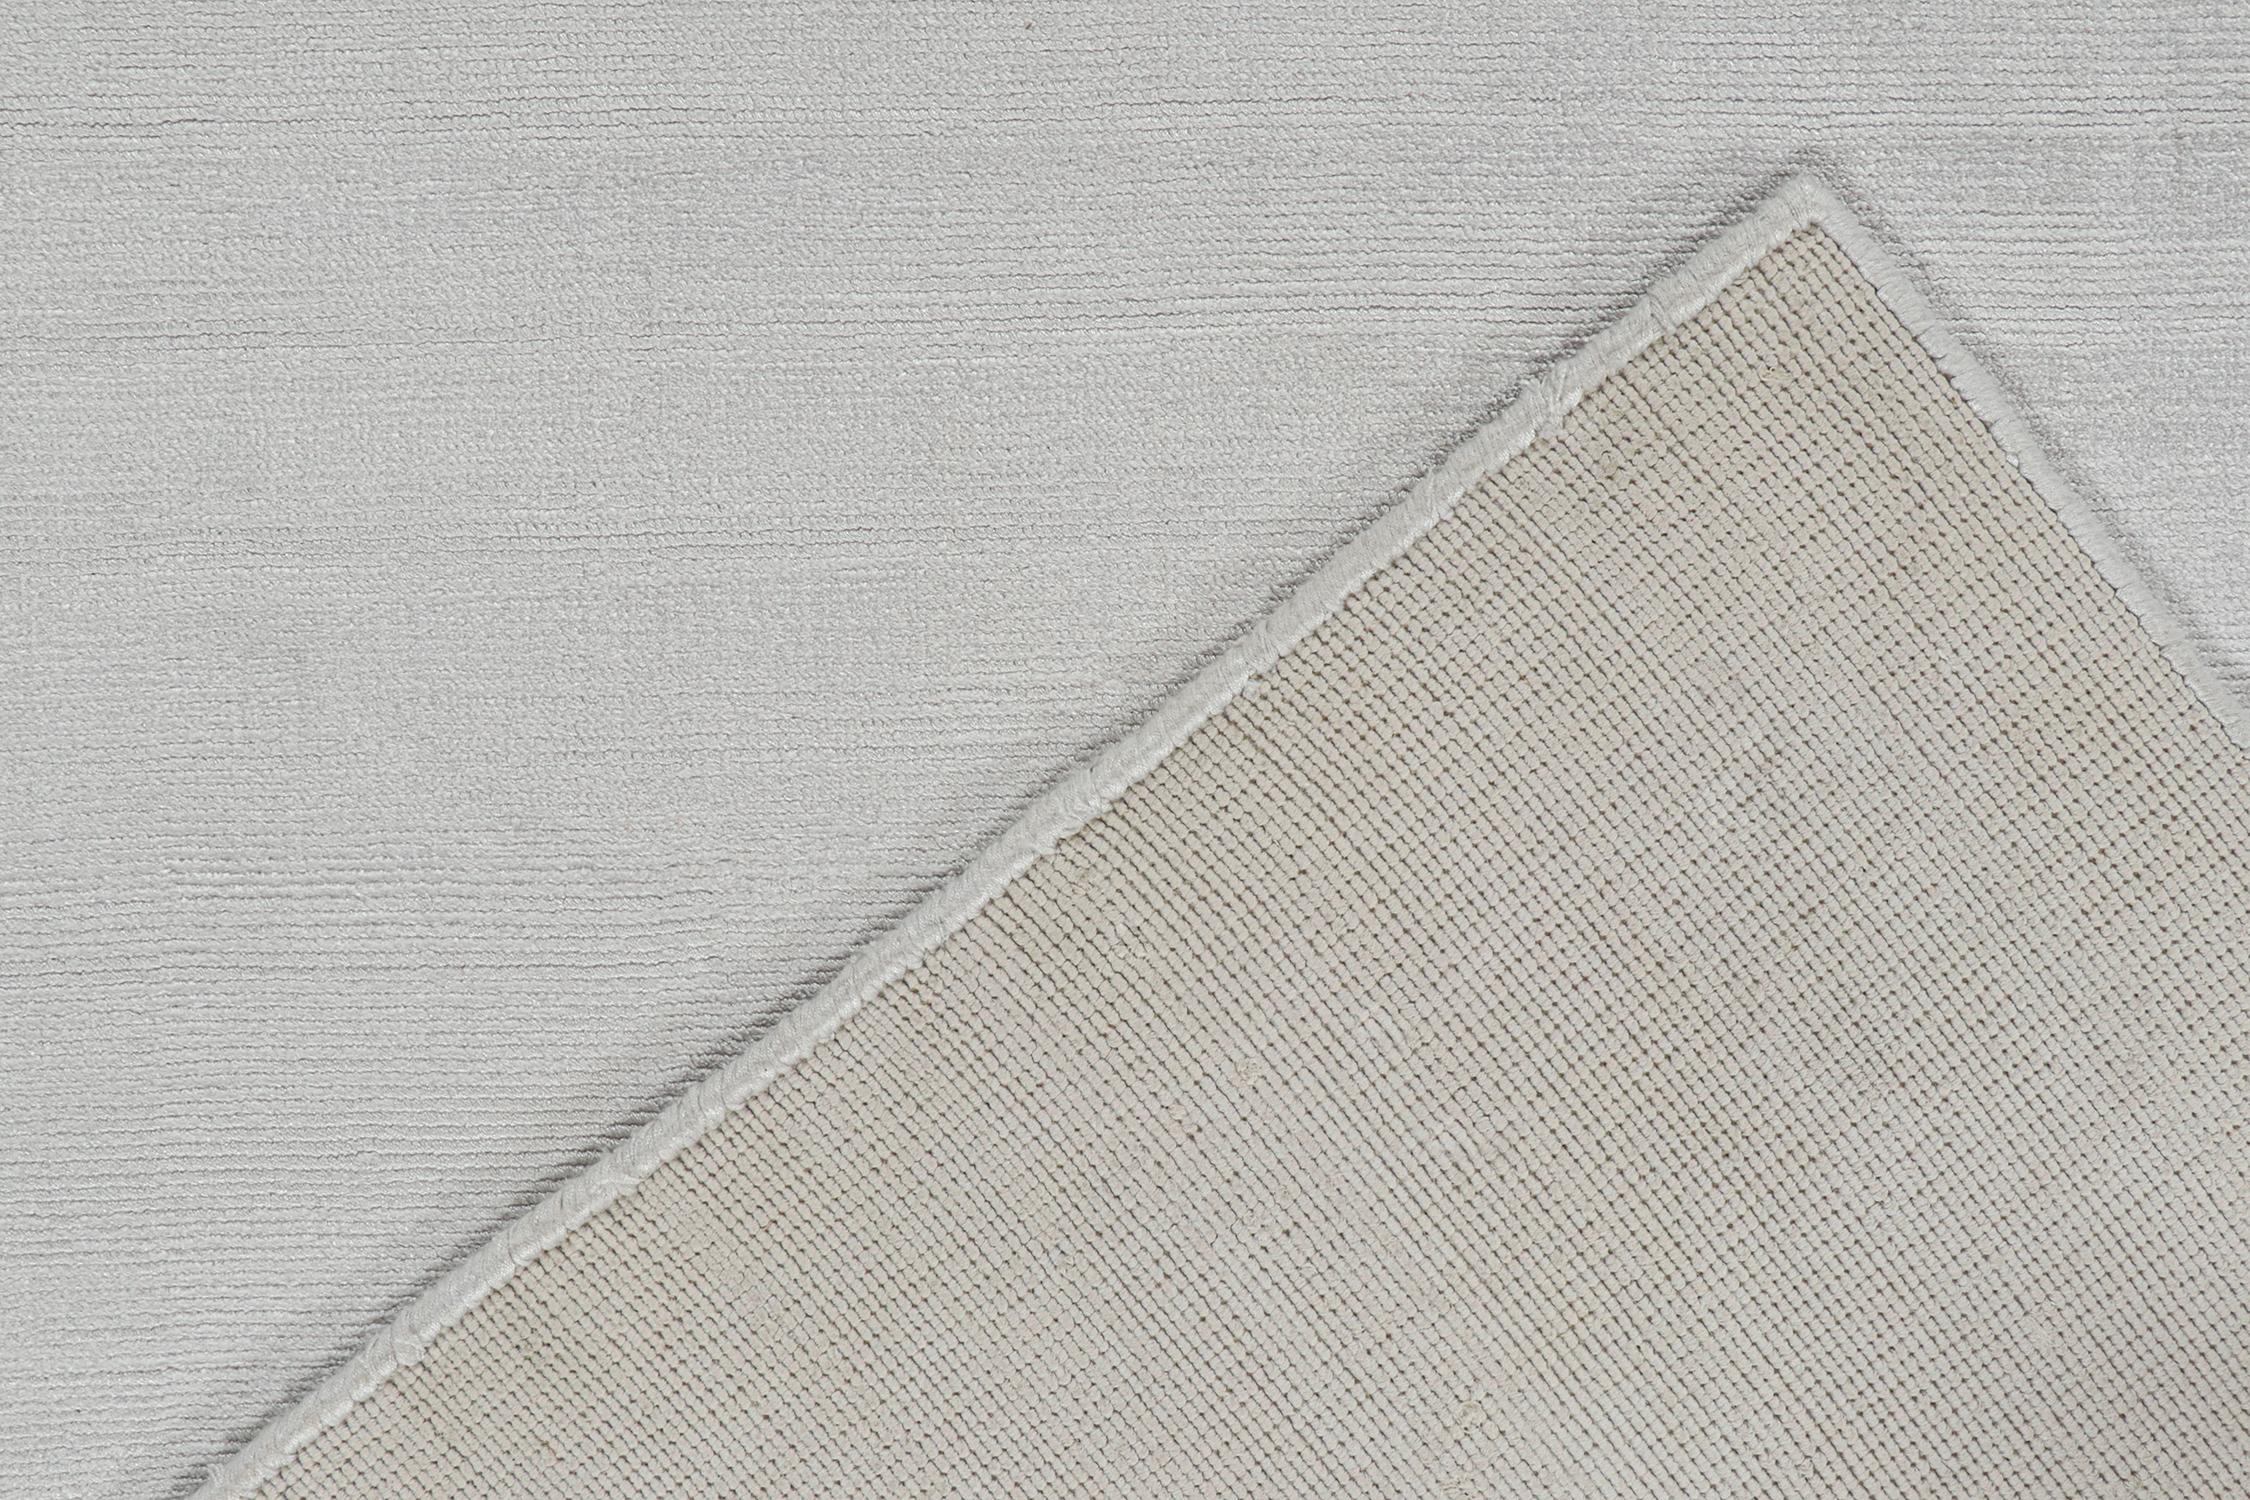 Rug & Kilim's Modern Rug in Solid Grey and Off-White Striae (tapis moderne avec des rayures en gris uni et en blanc cassé) Neuf - En vente à Long Island City, NY